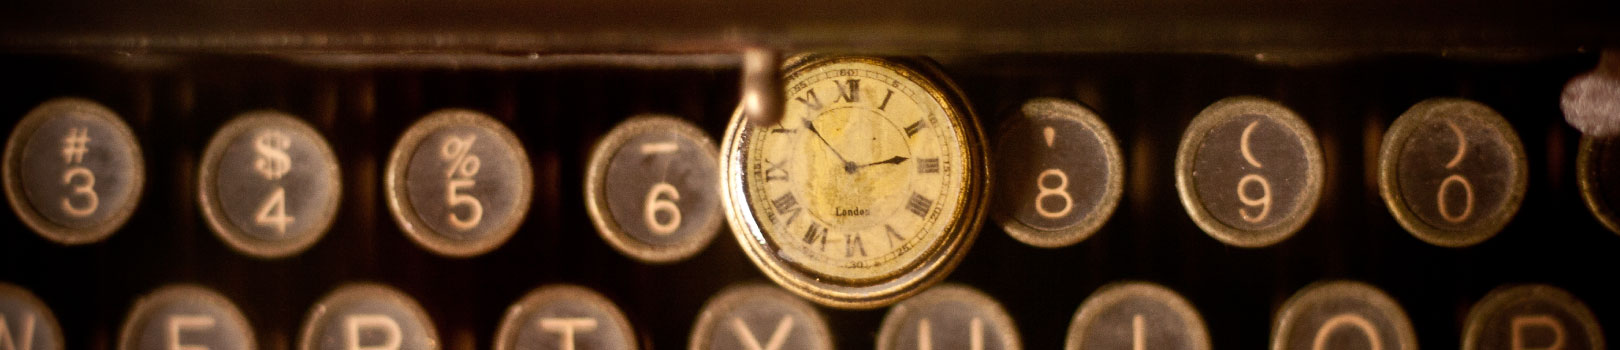 pocket watch on top of an old typewriter